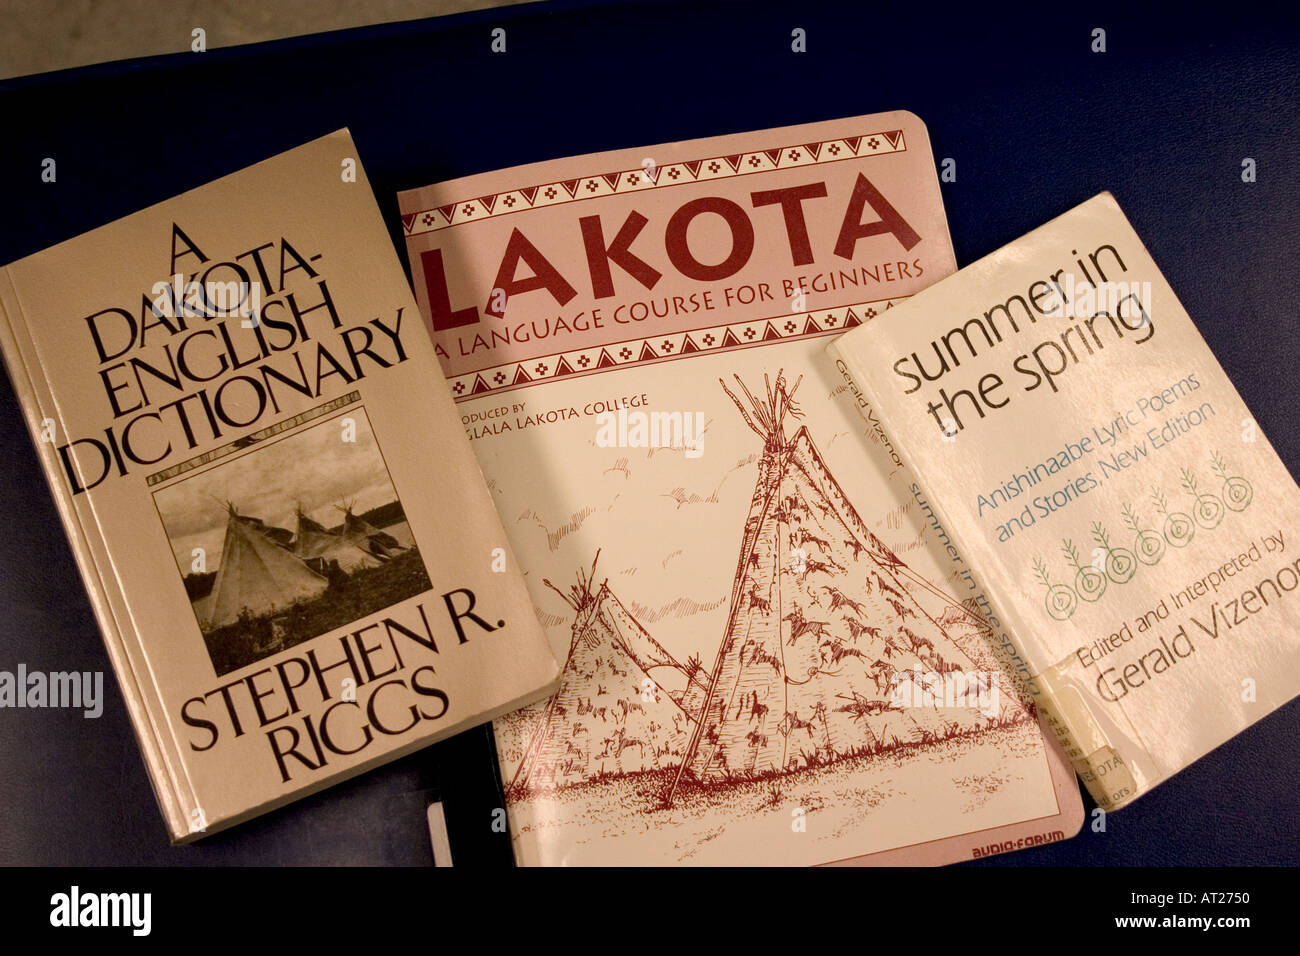 Dakota Wörterbuch Lakota Sprachkurs und Sommer im Frühjahr in der Zentralbibliothek. Minneapolis Minnesota MN USA Stockfoto